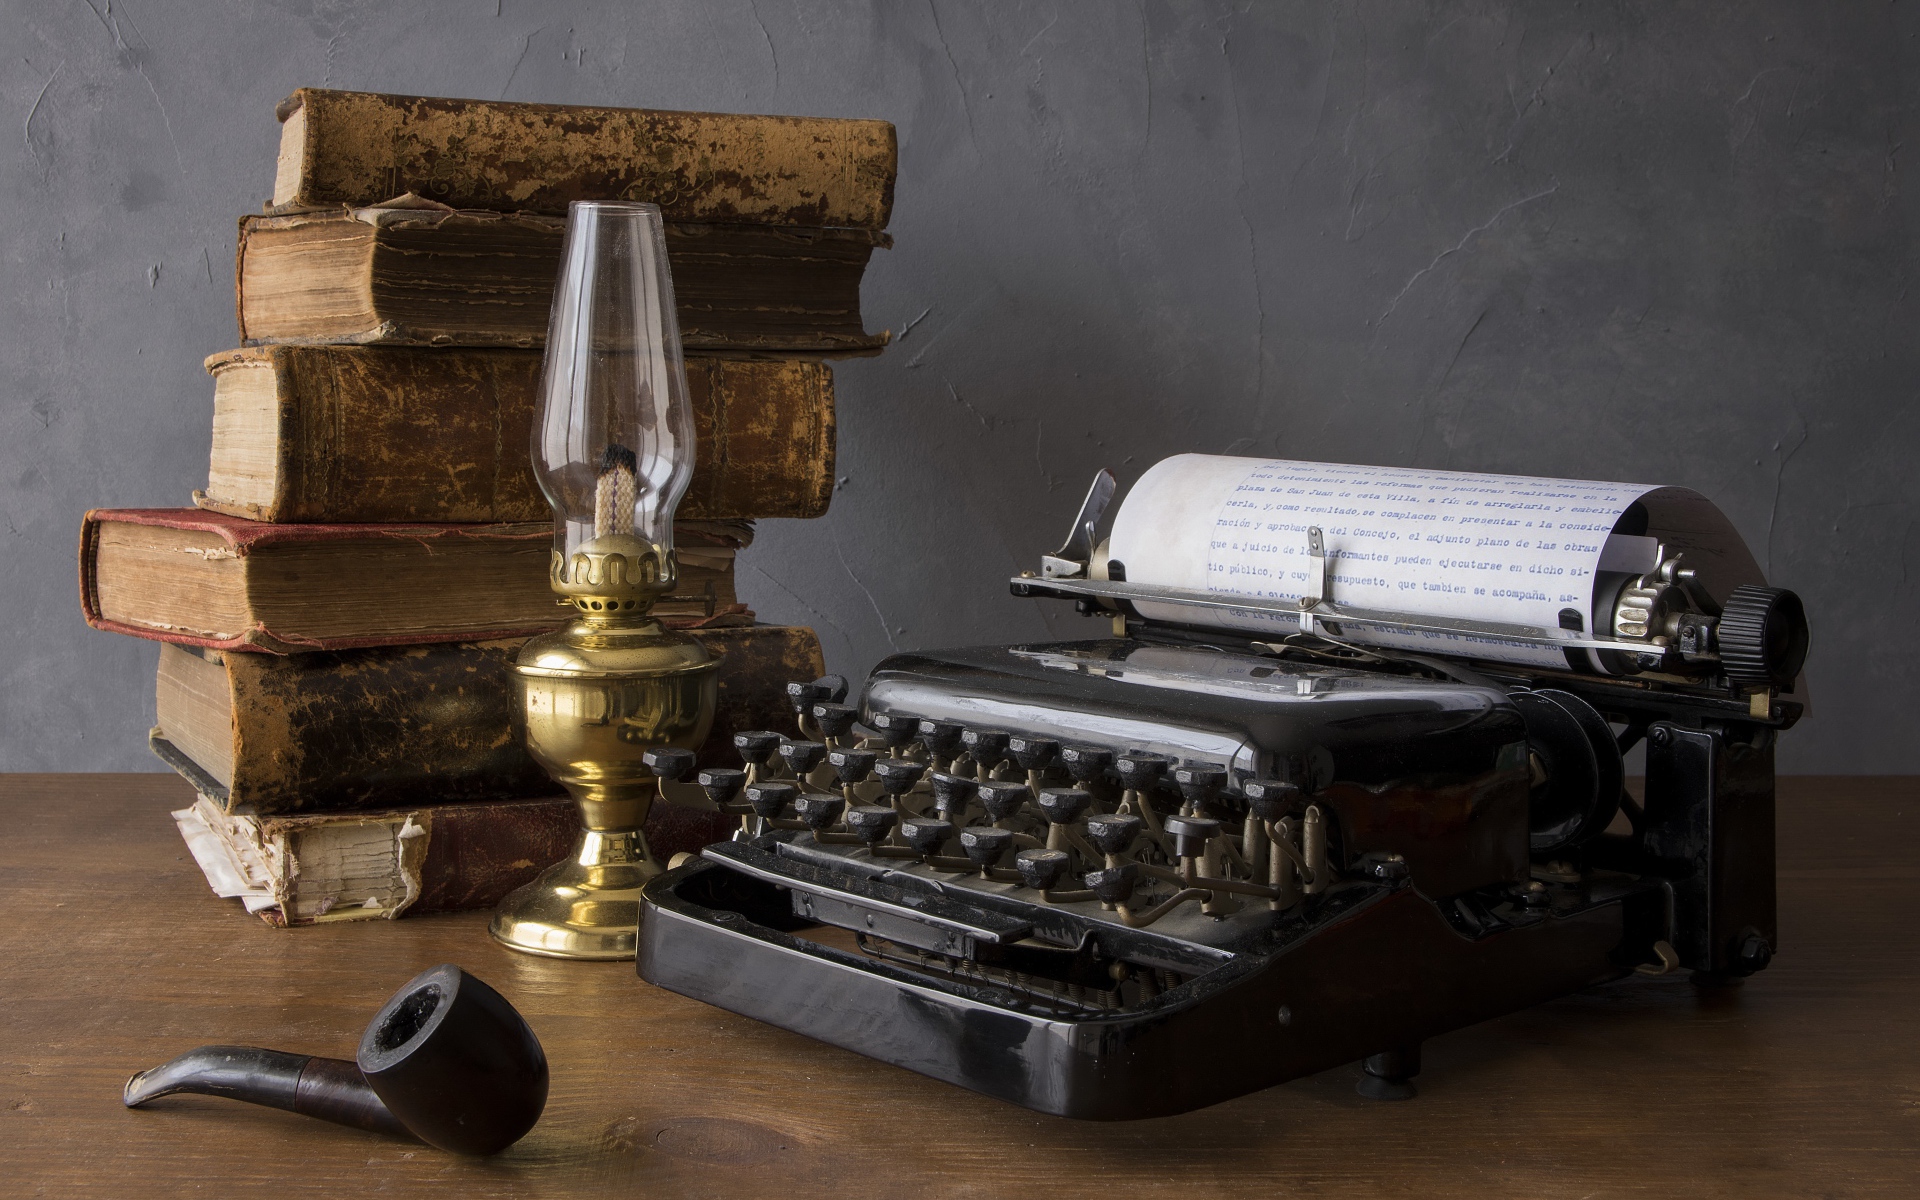 Old typewriter, books, kerosene lamp and tube on the table